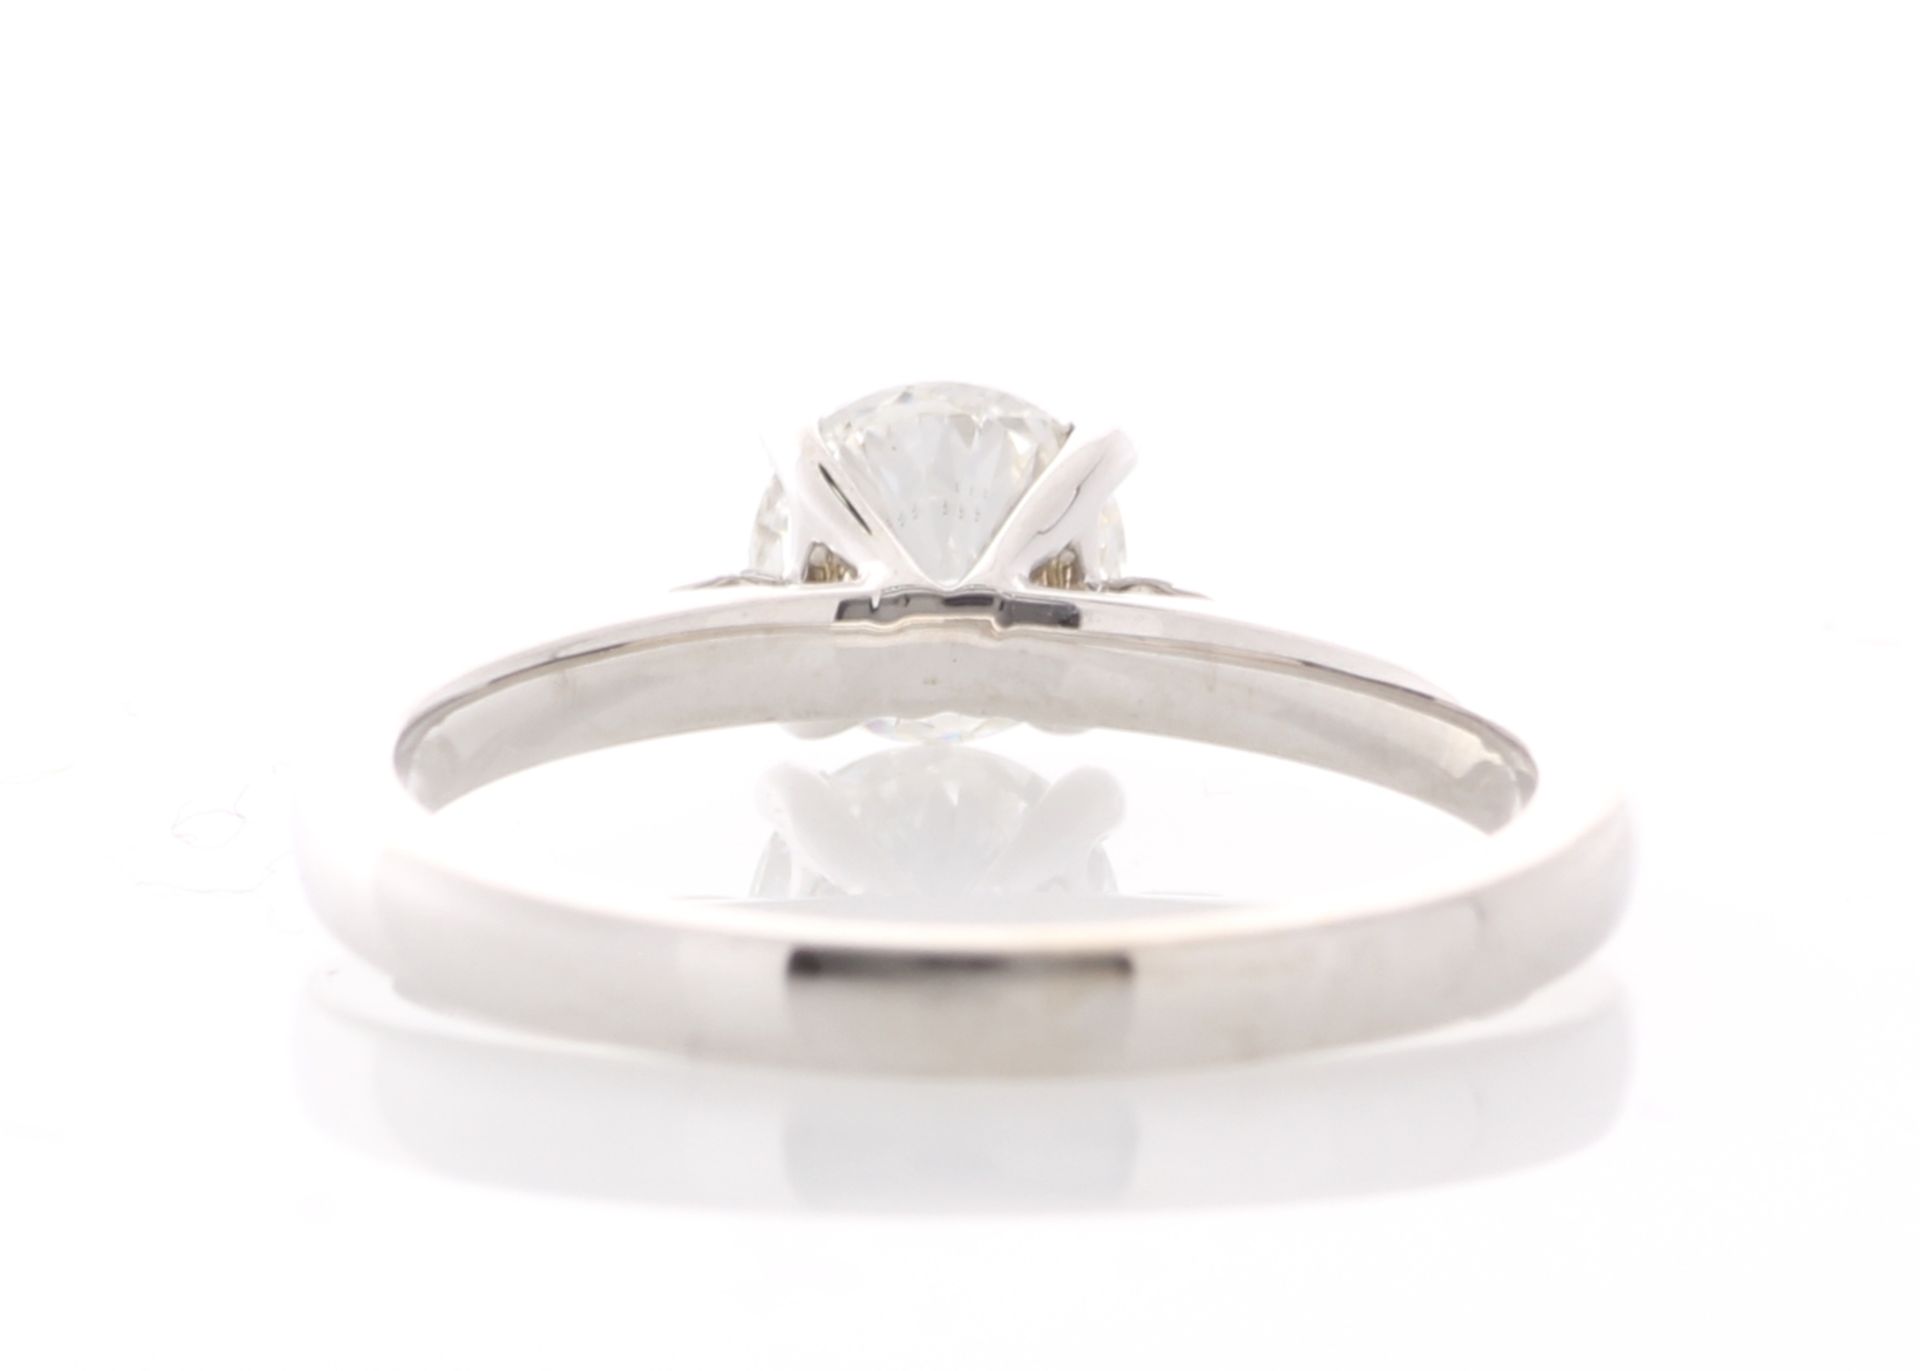 18ct White Gold Single Stone Prong Set Diamond Ring 0.73 Carats - Image 3 of 5